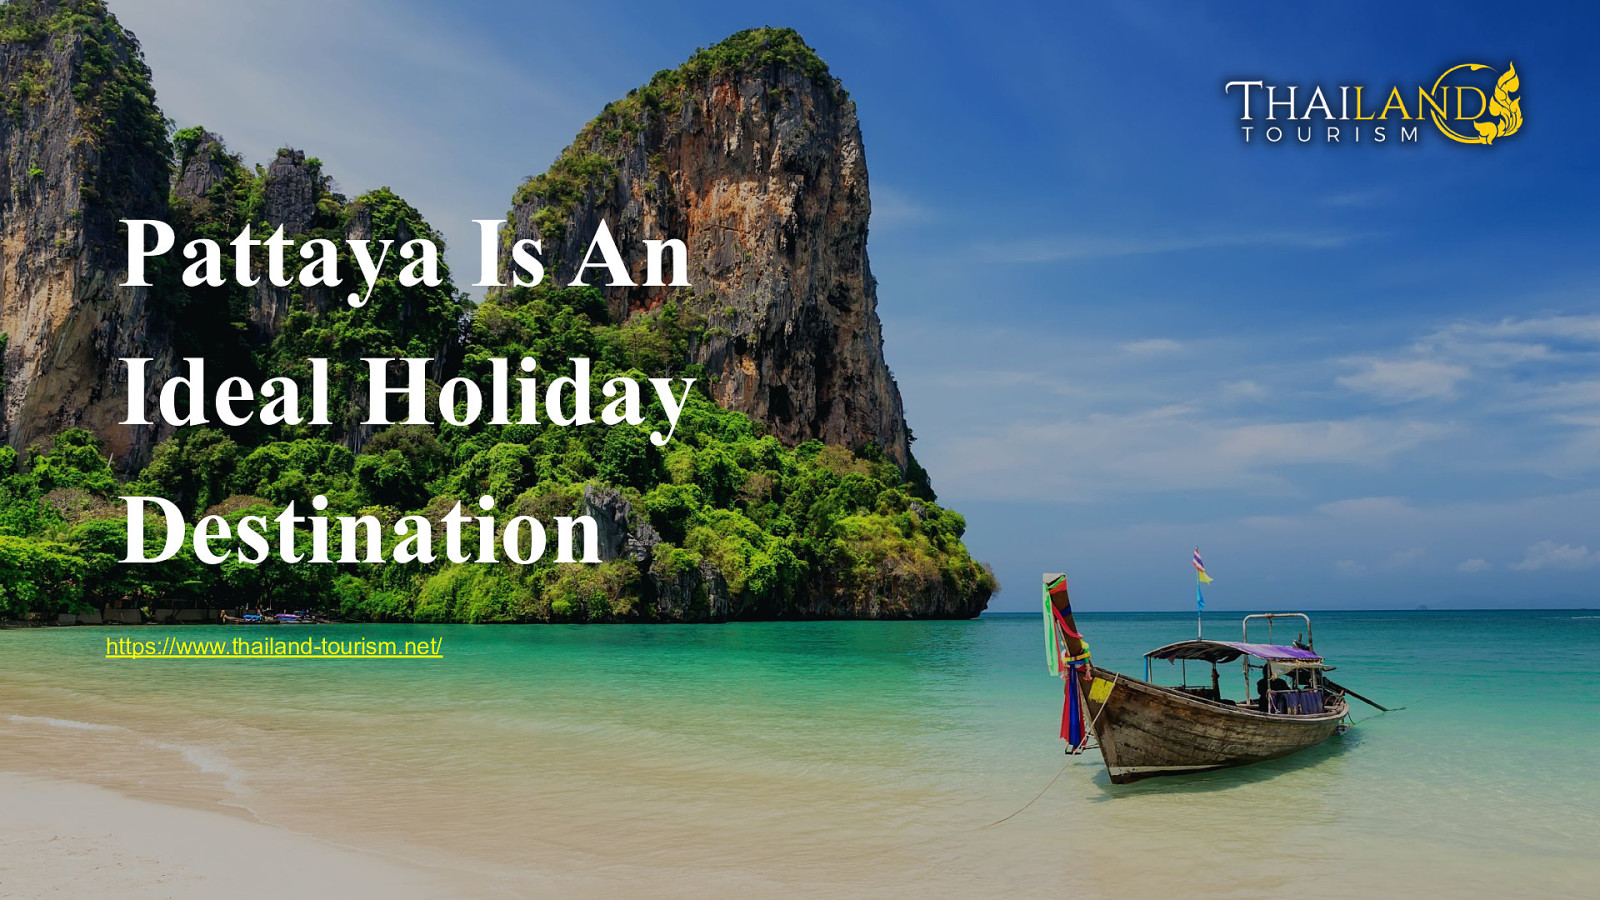 Pattaya is an ideal holiday destination